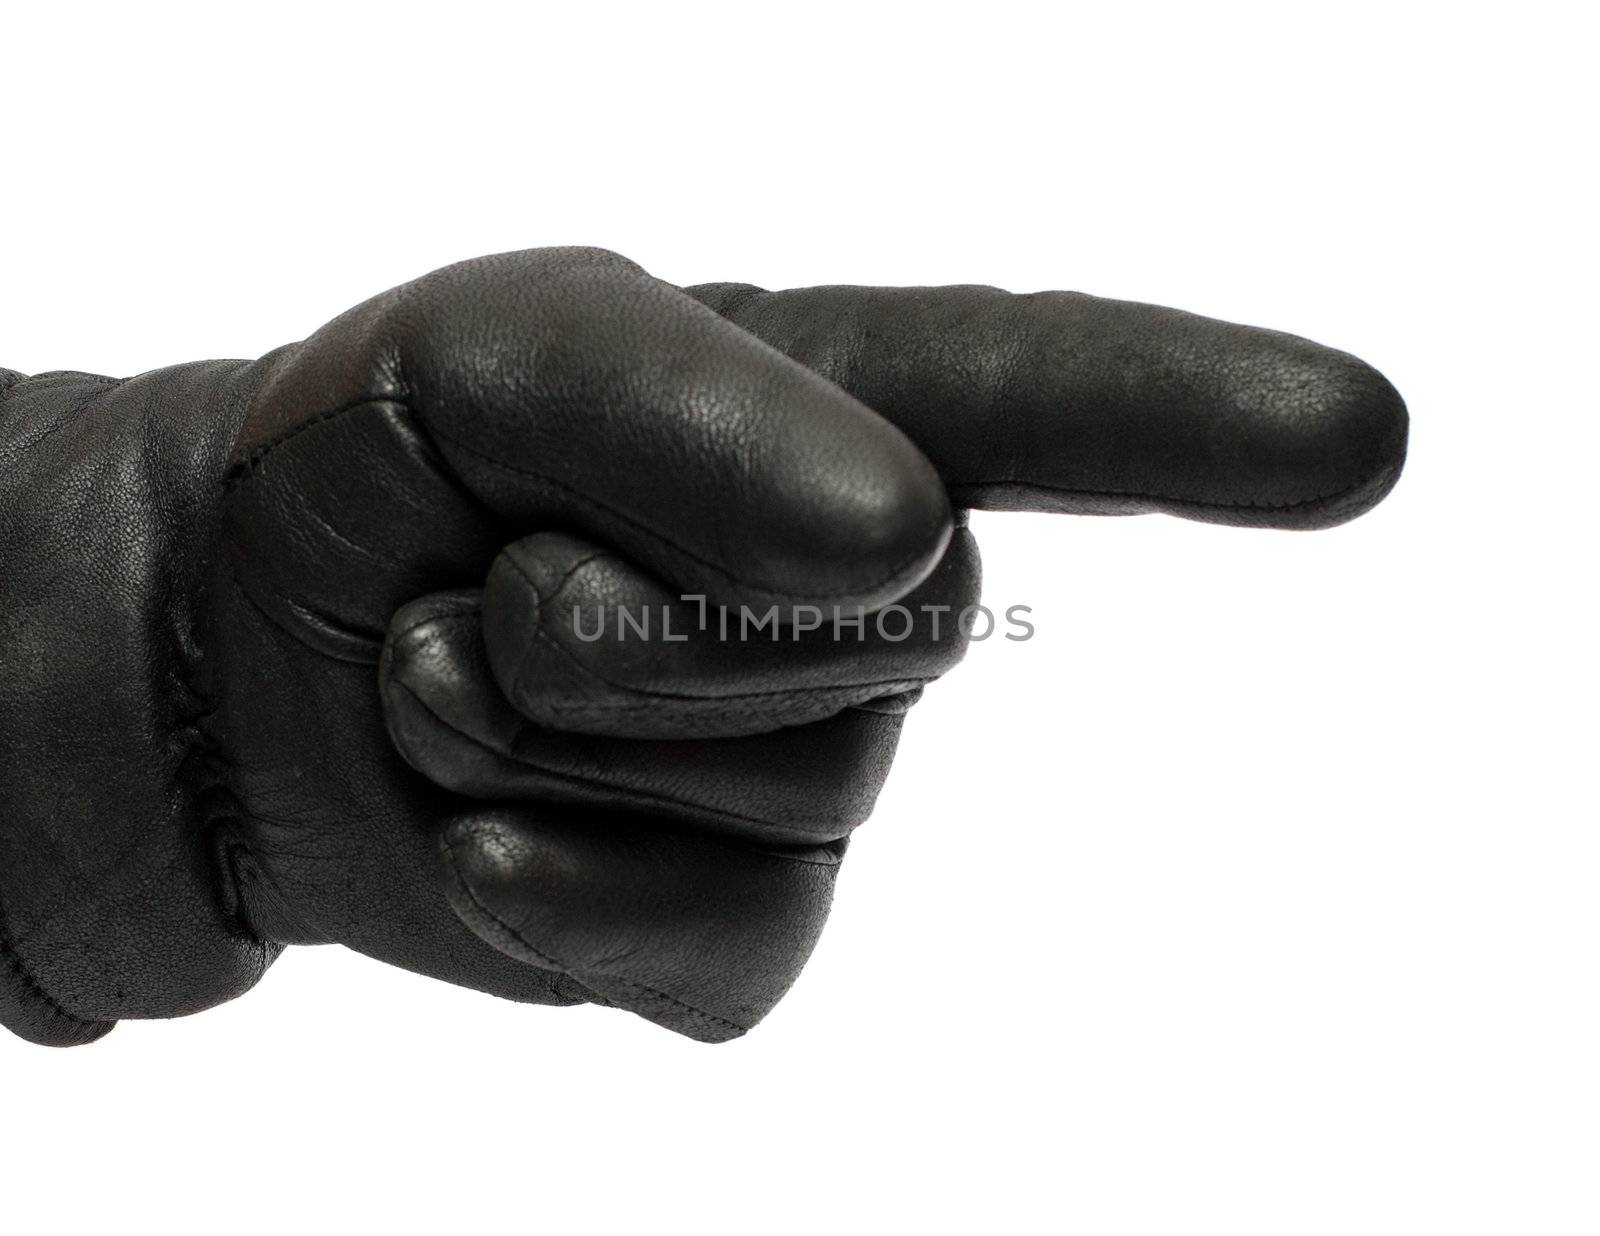 hand in black glove showing direction by Mikko